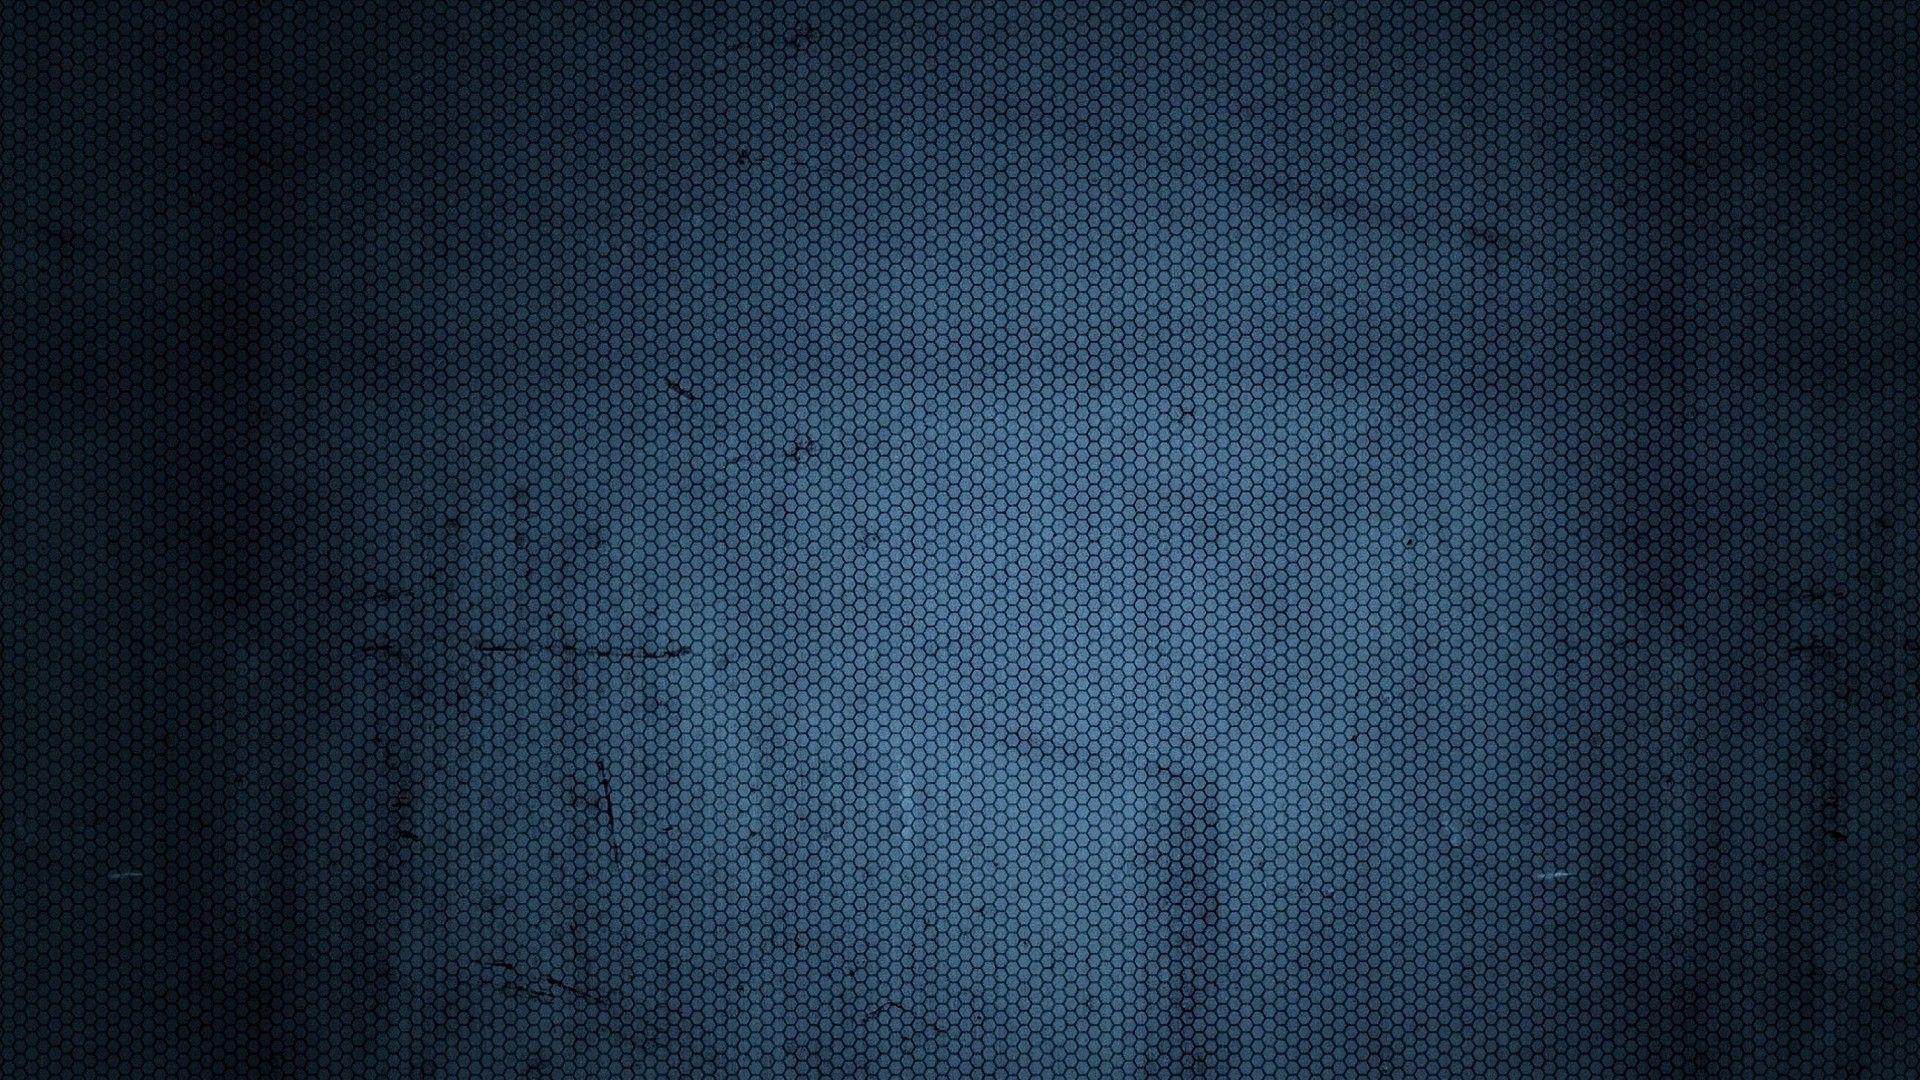 Free 1920x1080 Dark Blue Patterns Wallpaper Full HD 1080p Background